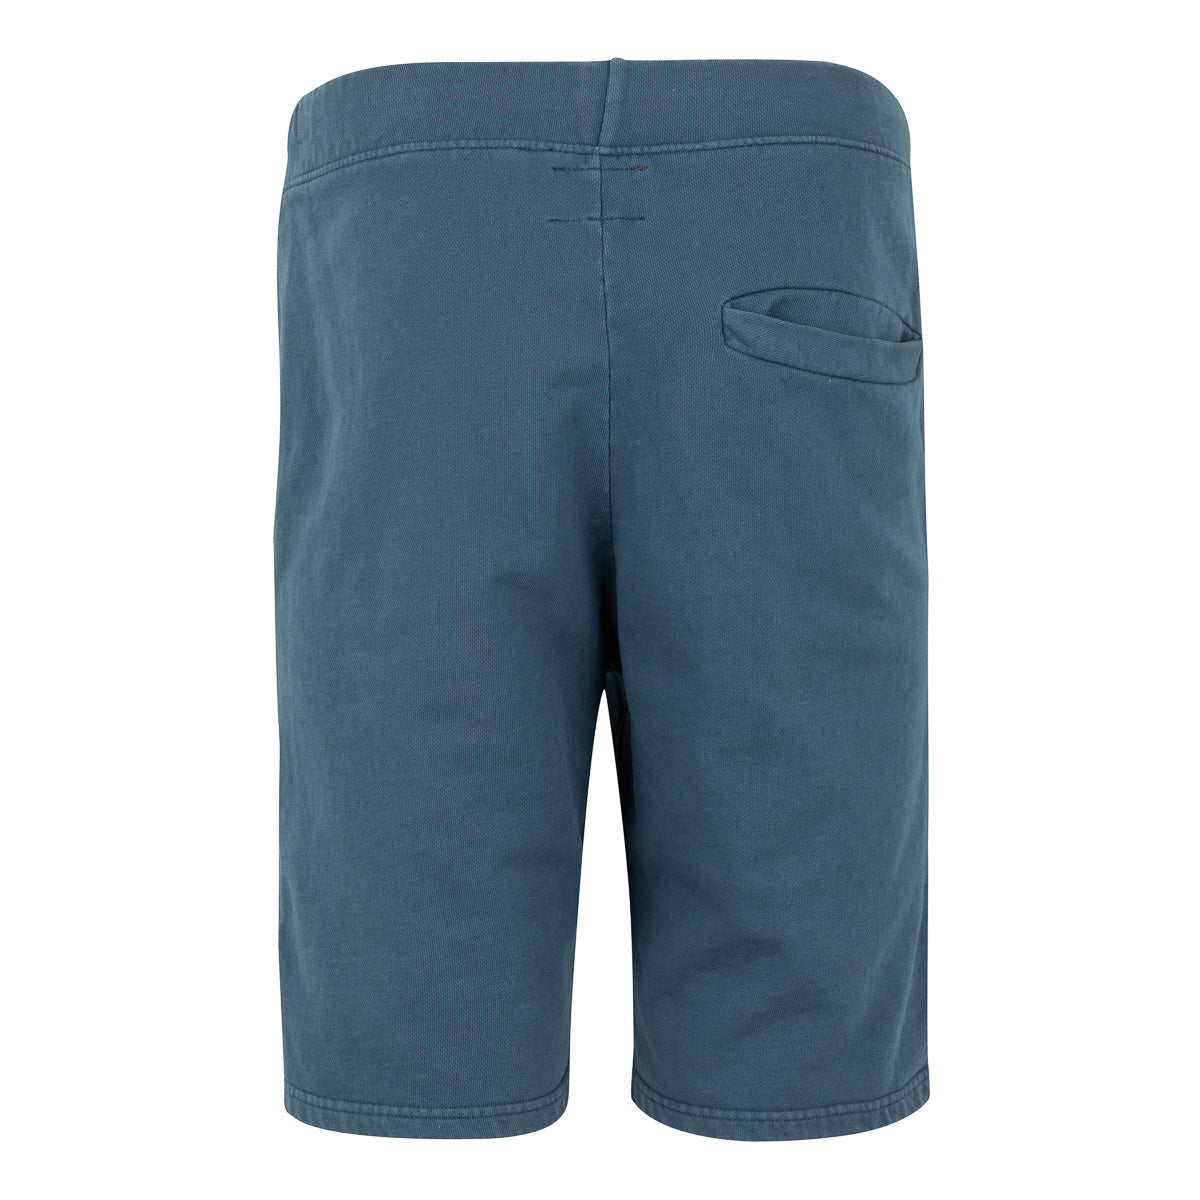 Men's AC Collection Shorts - Blue